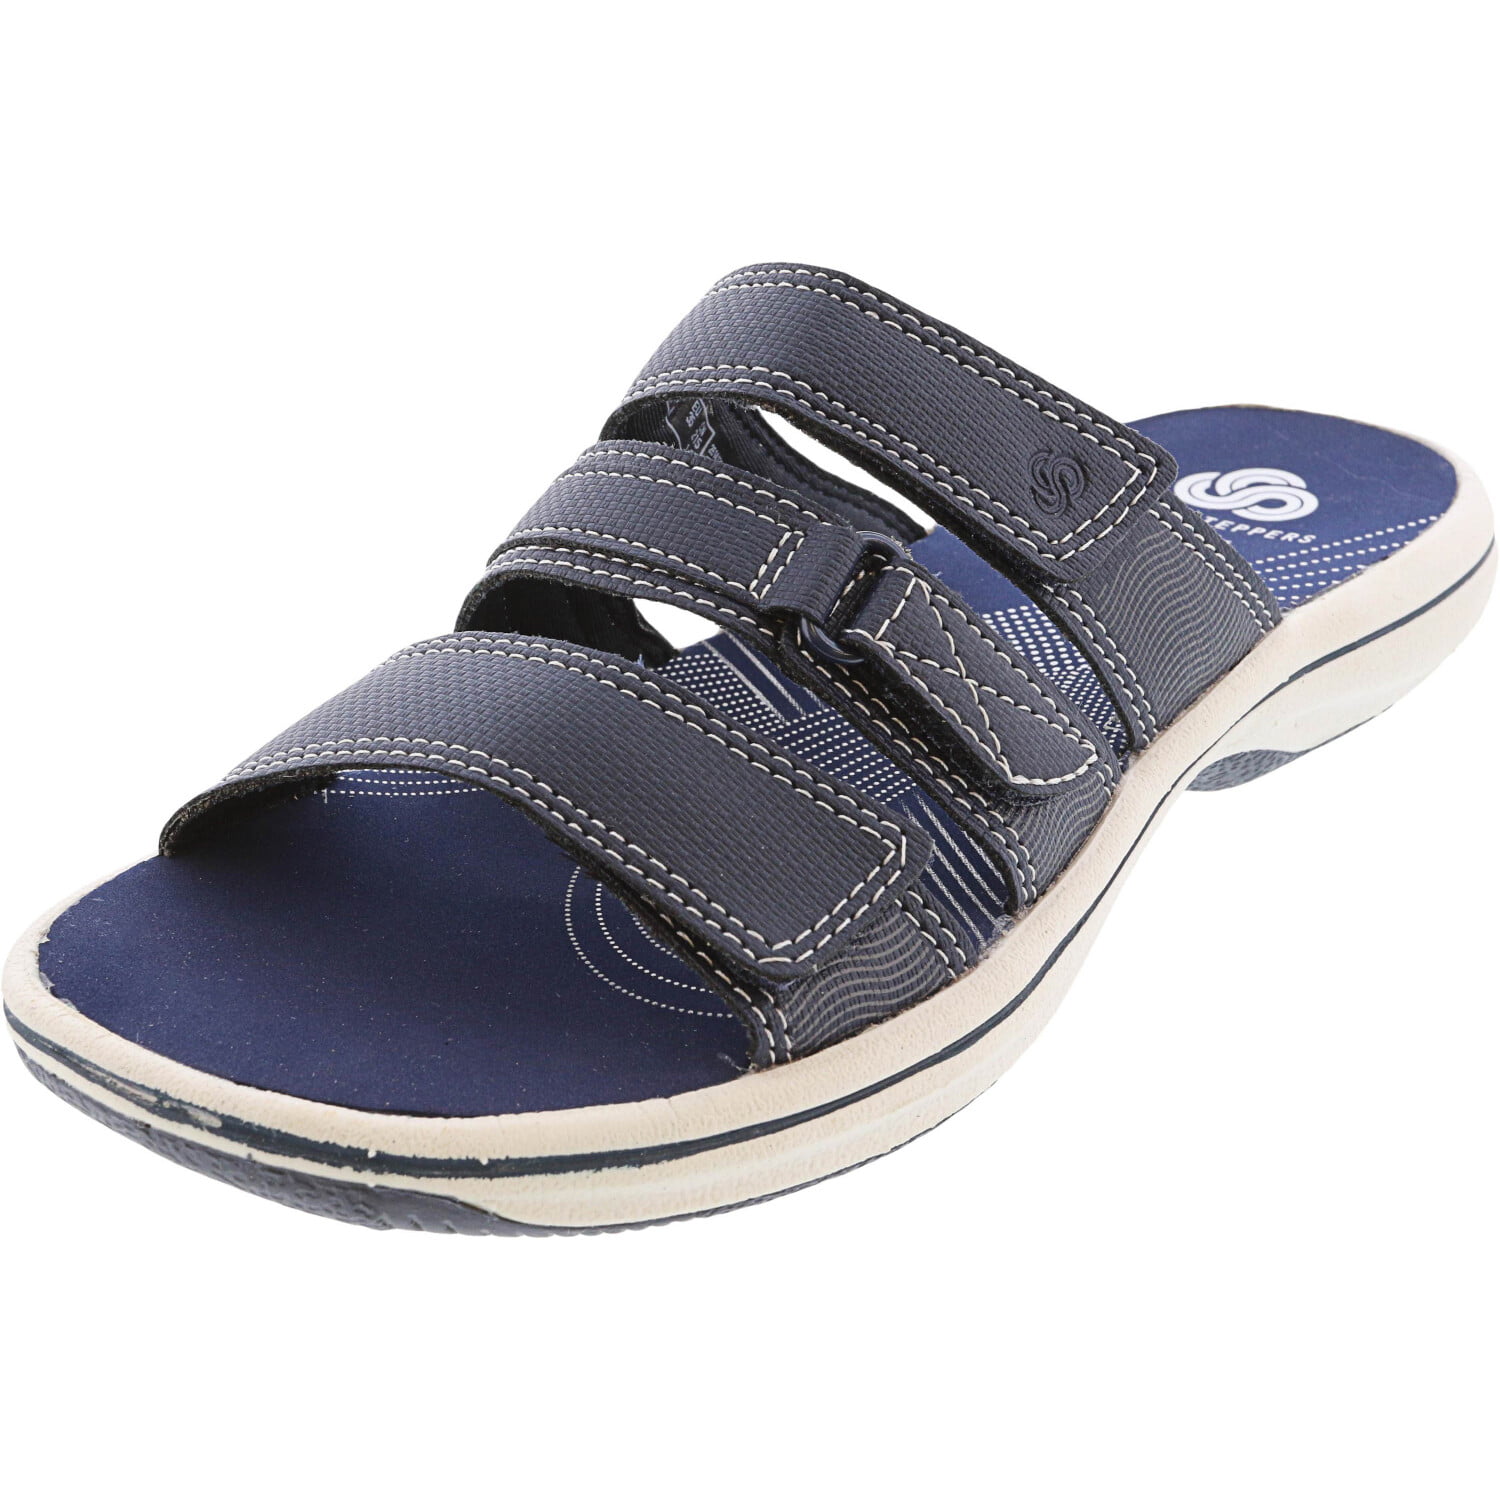 clarks brinkley coast slide sandal